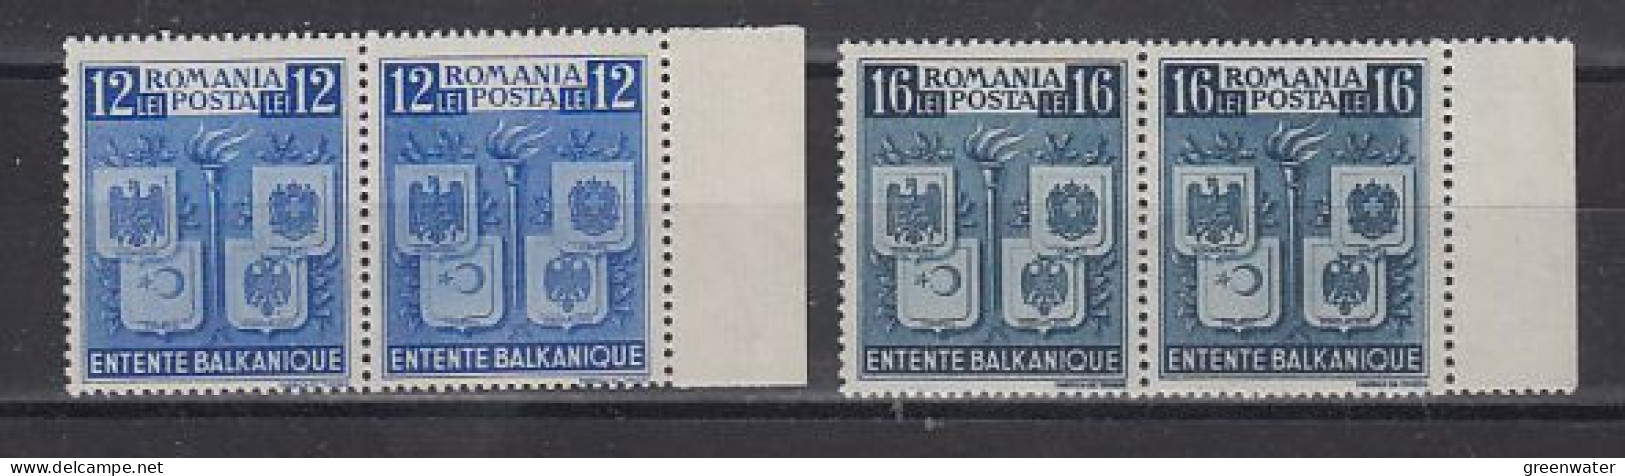 Romania 1940 Petite Entente 2v (pair) ** Mnh (59753) - Europese Gedachte